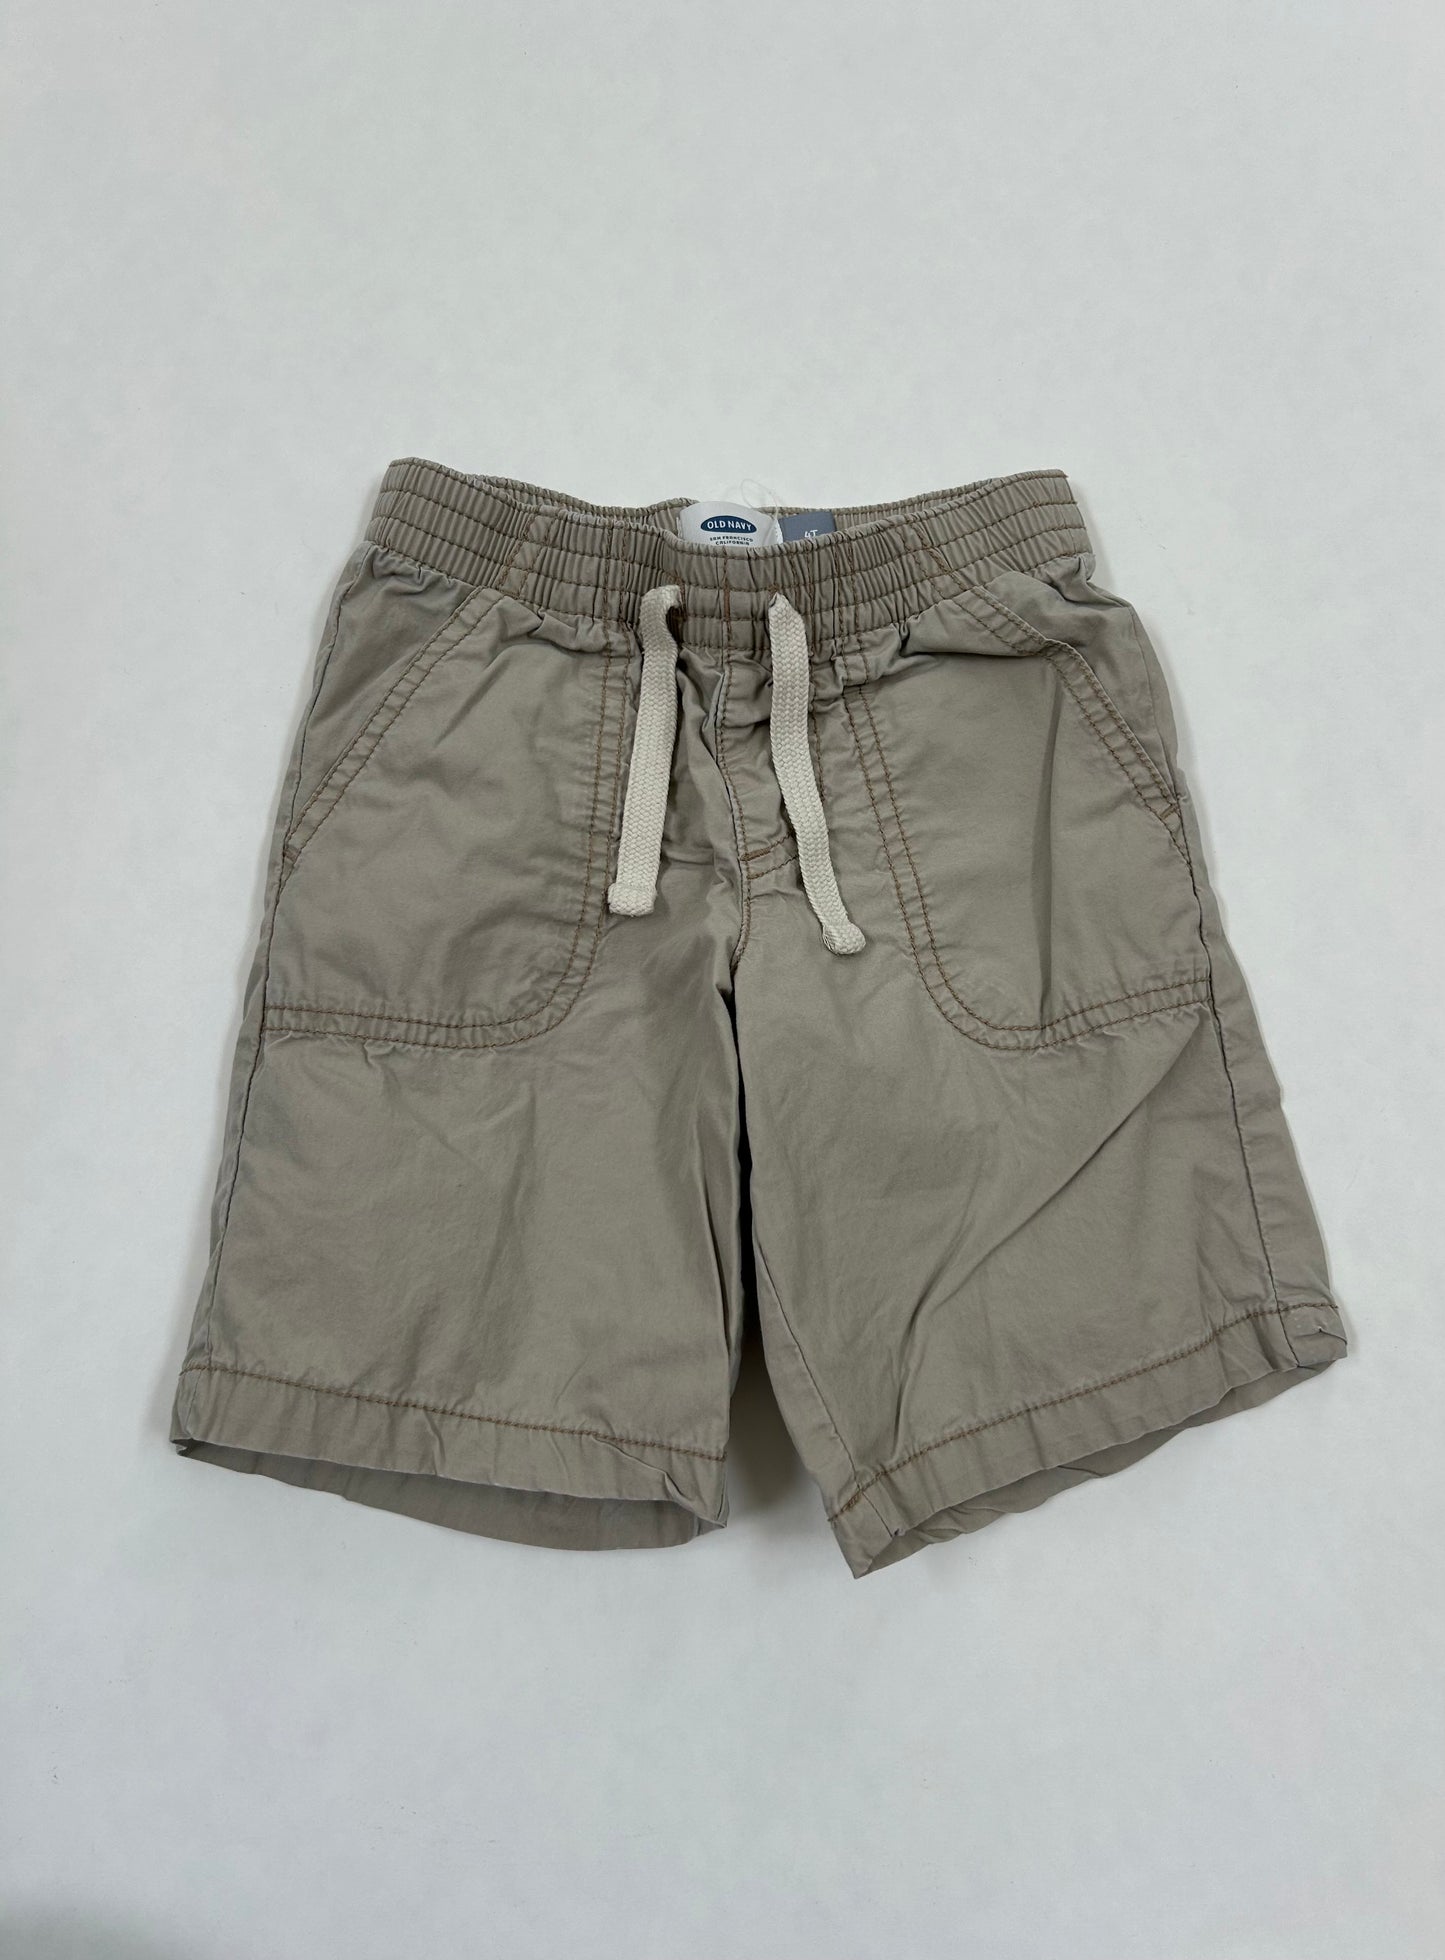 Boys 4T Old Navy khaki shorts